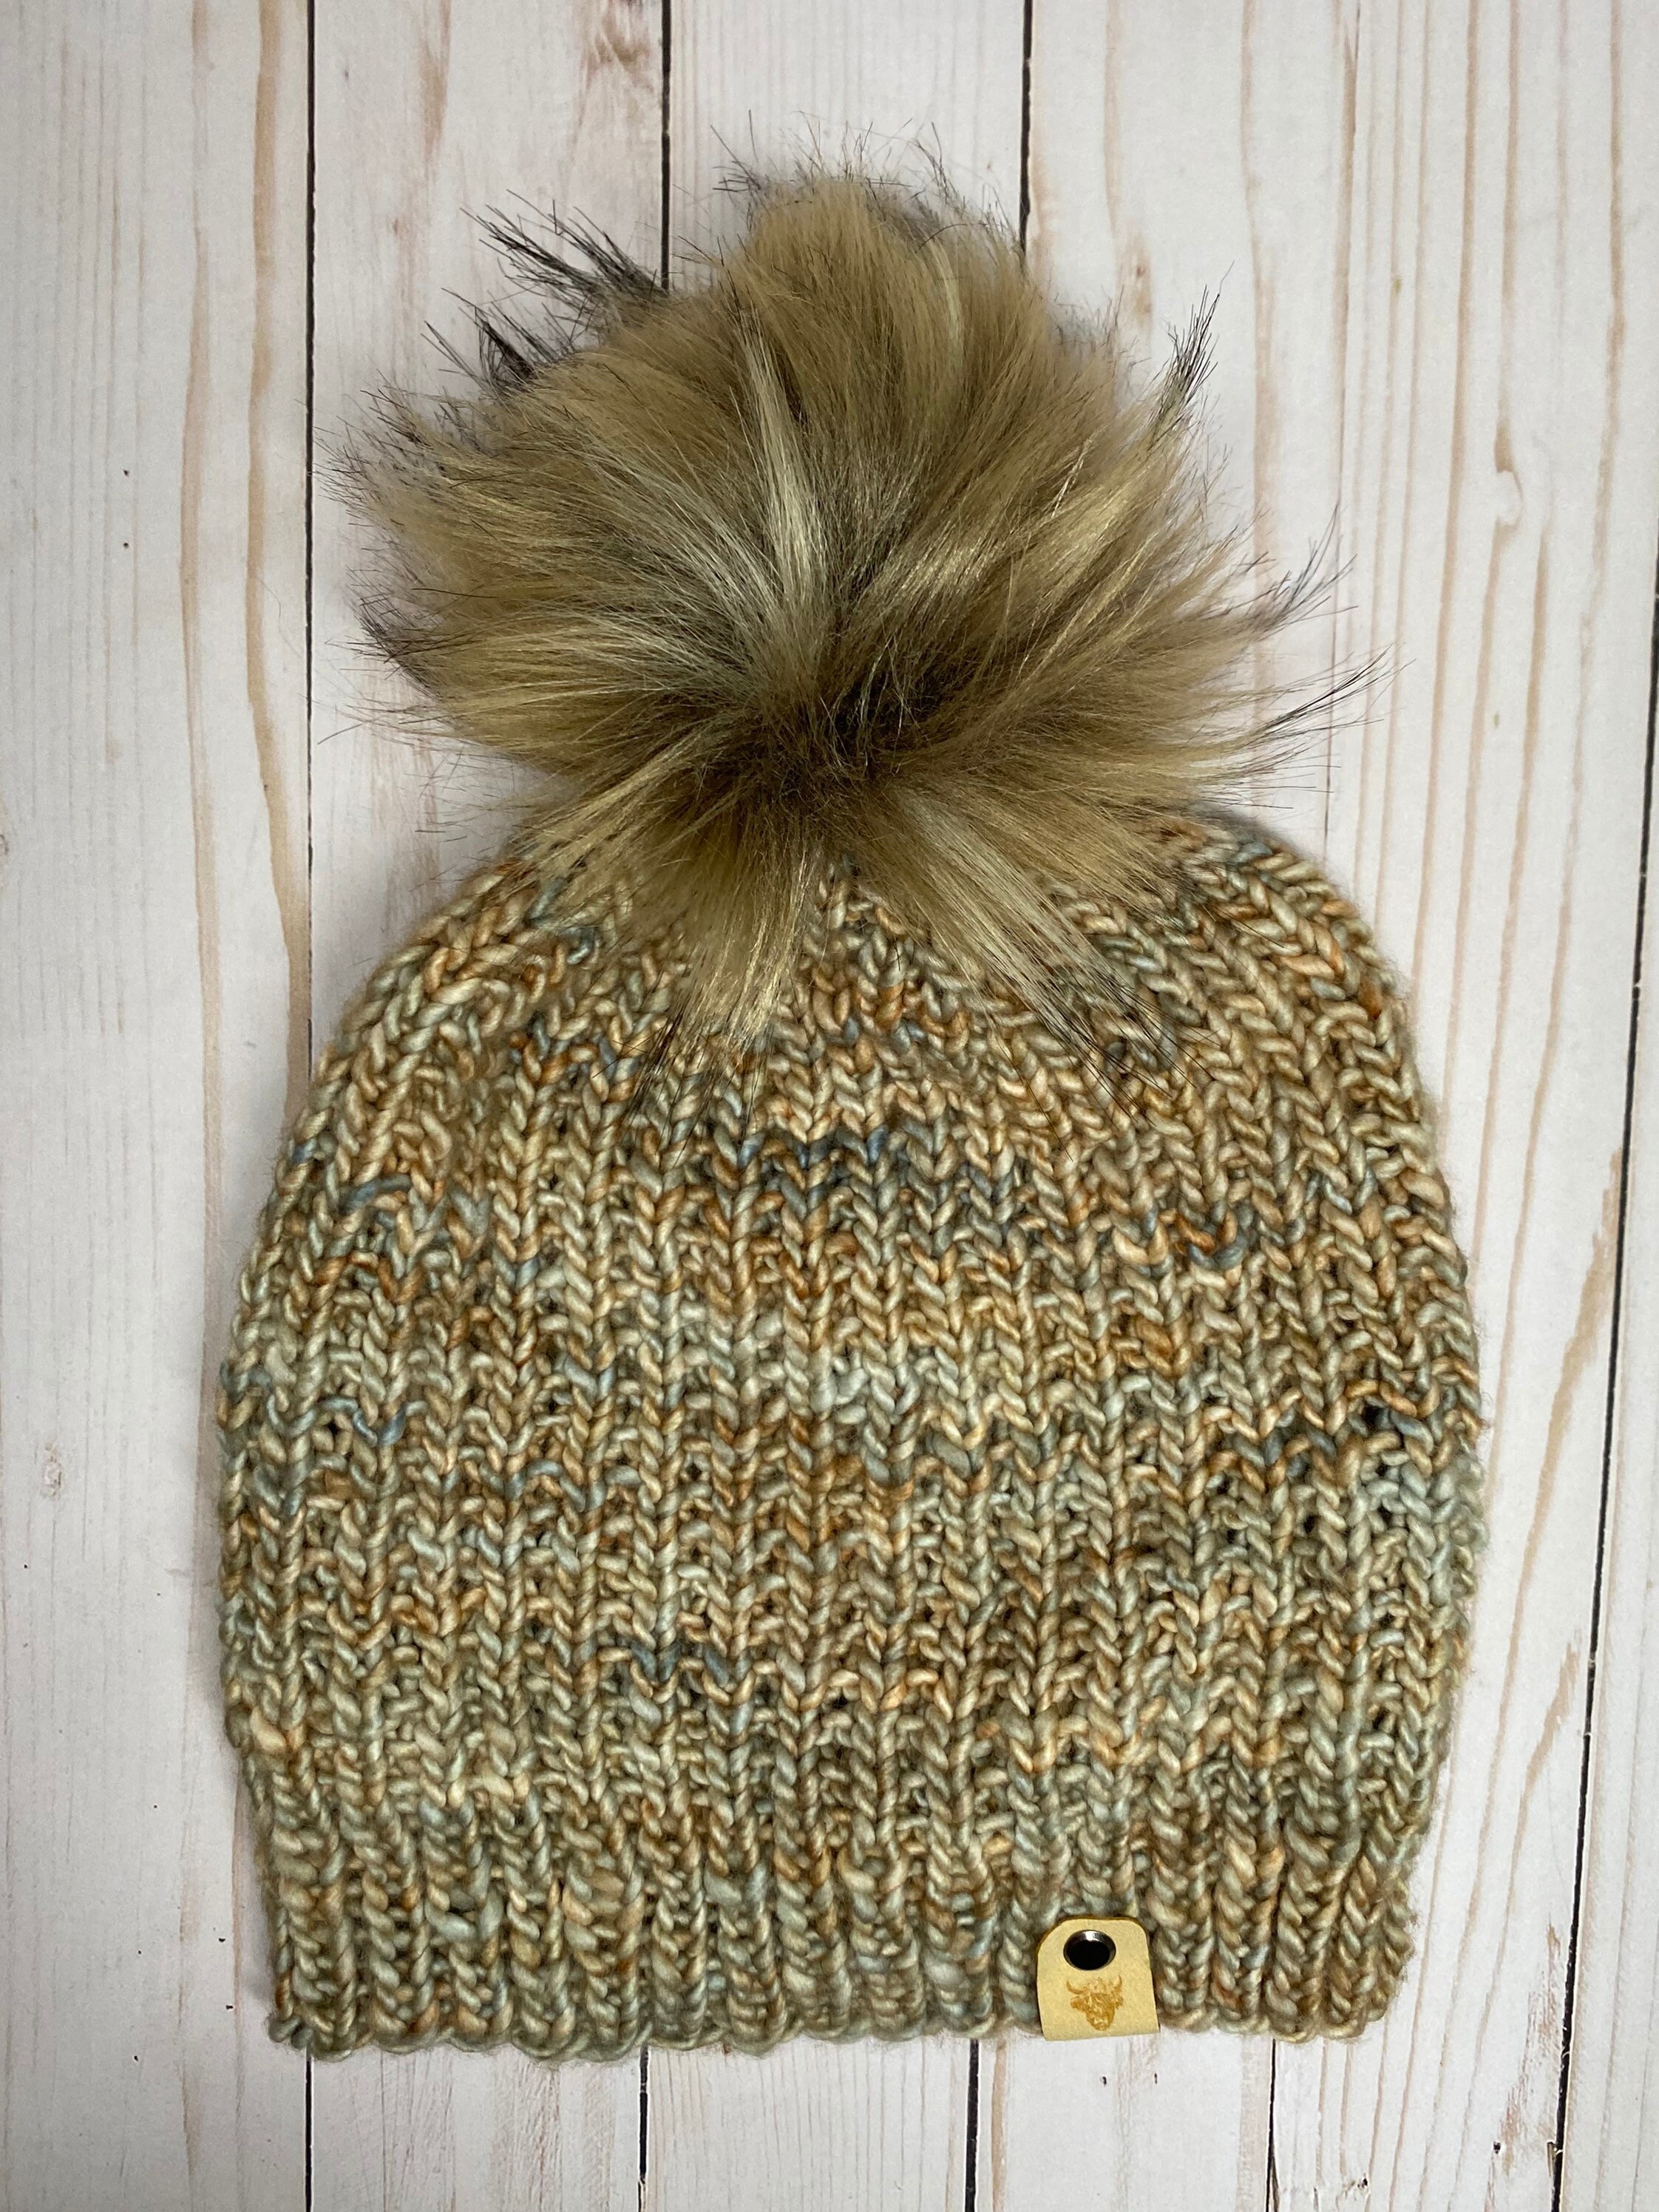 Knitted Hat Patterns on Circular Needles - Knitfarious